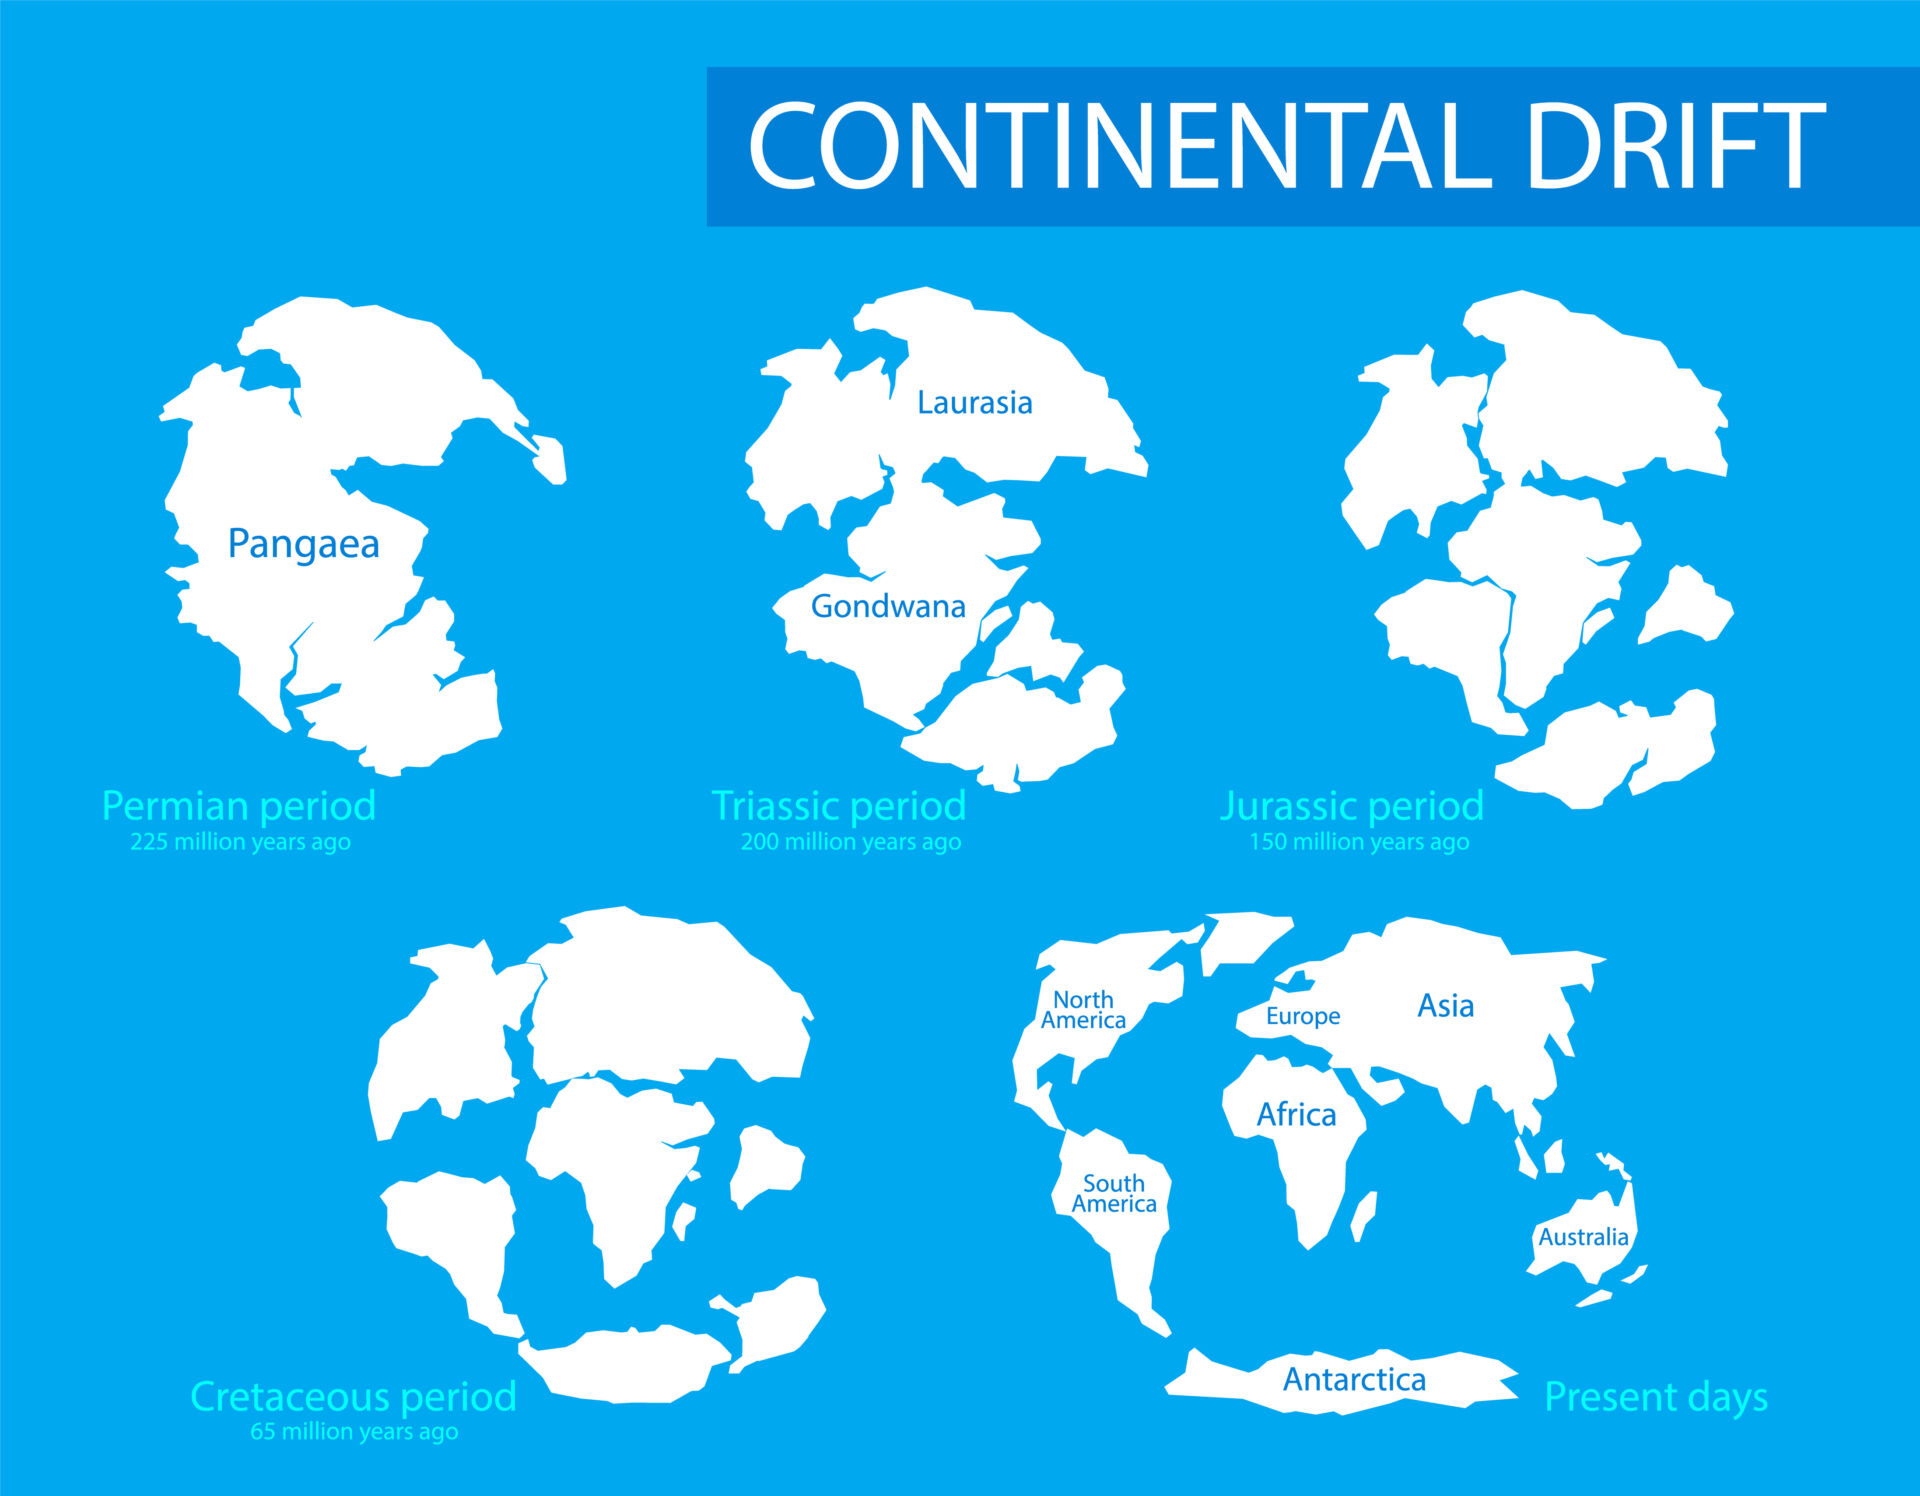 Continental Drift Theory